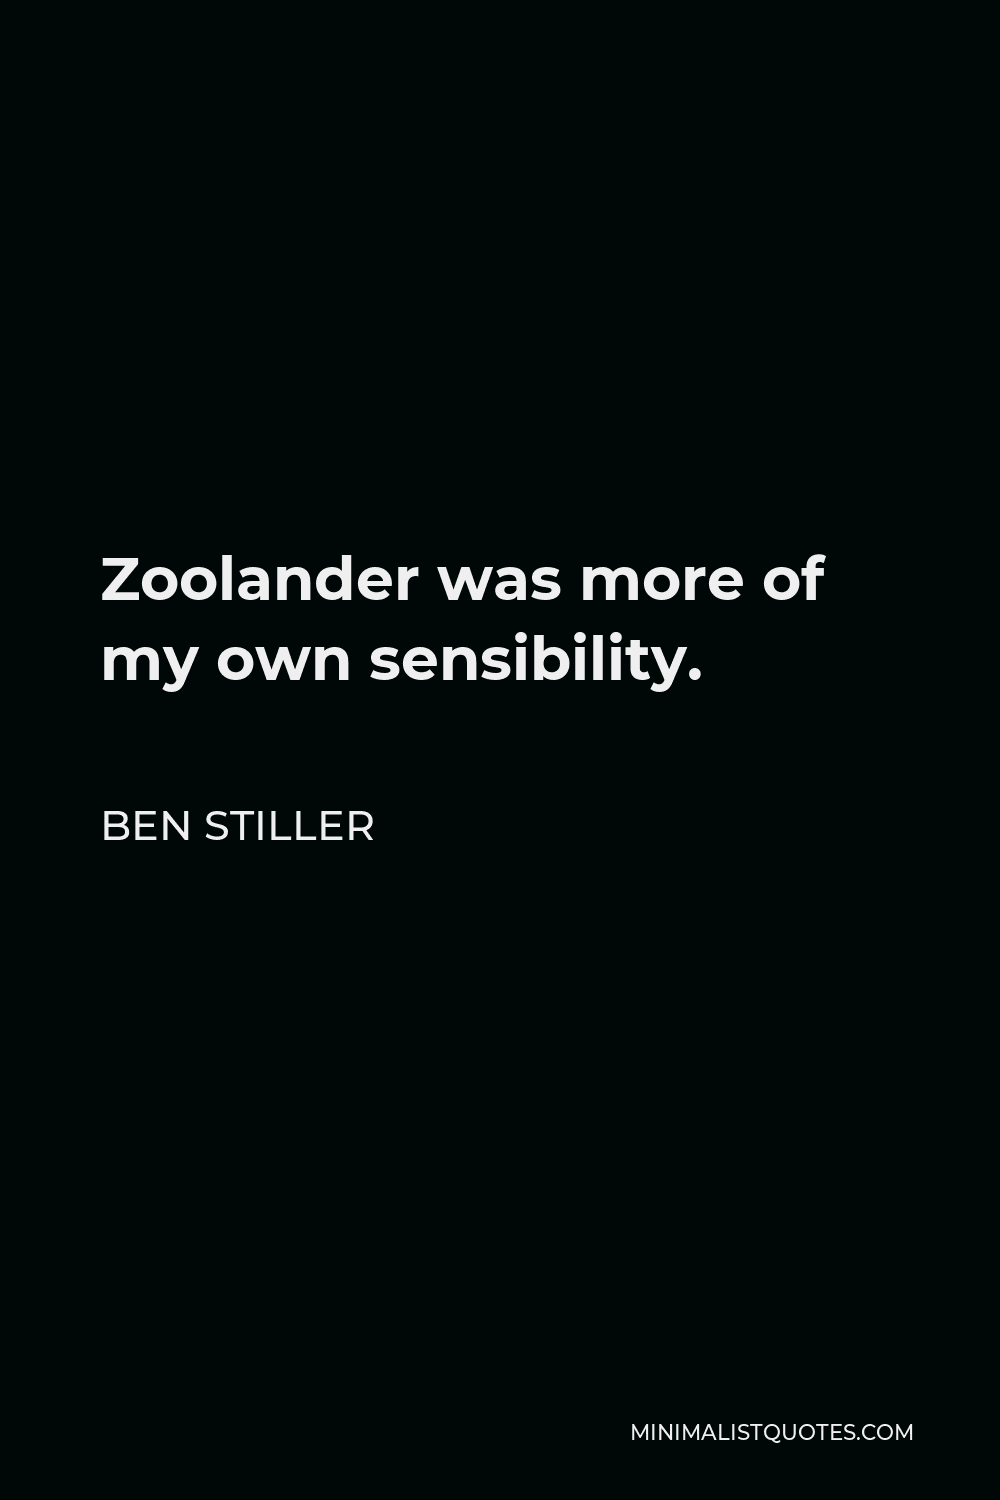 Ben Stiller Quote - Zoolander was more of my own sensibility.